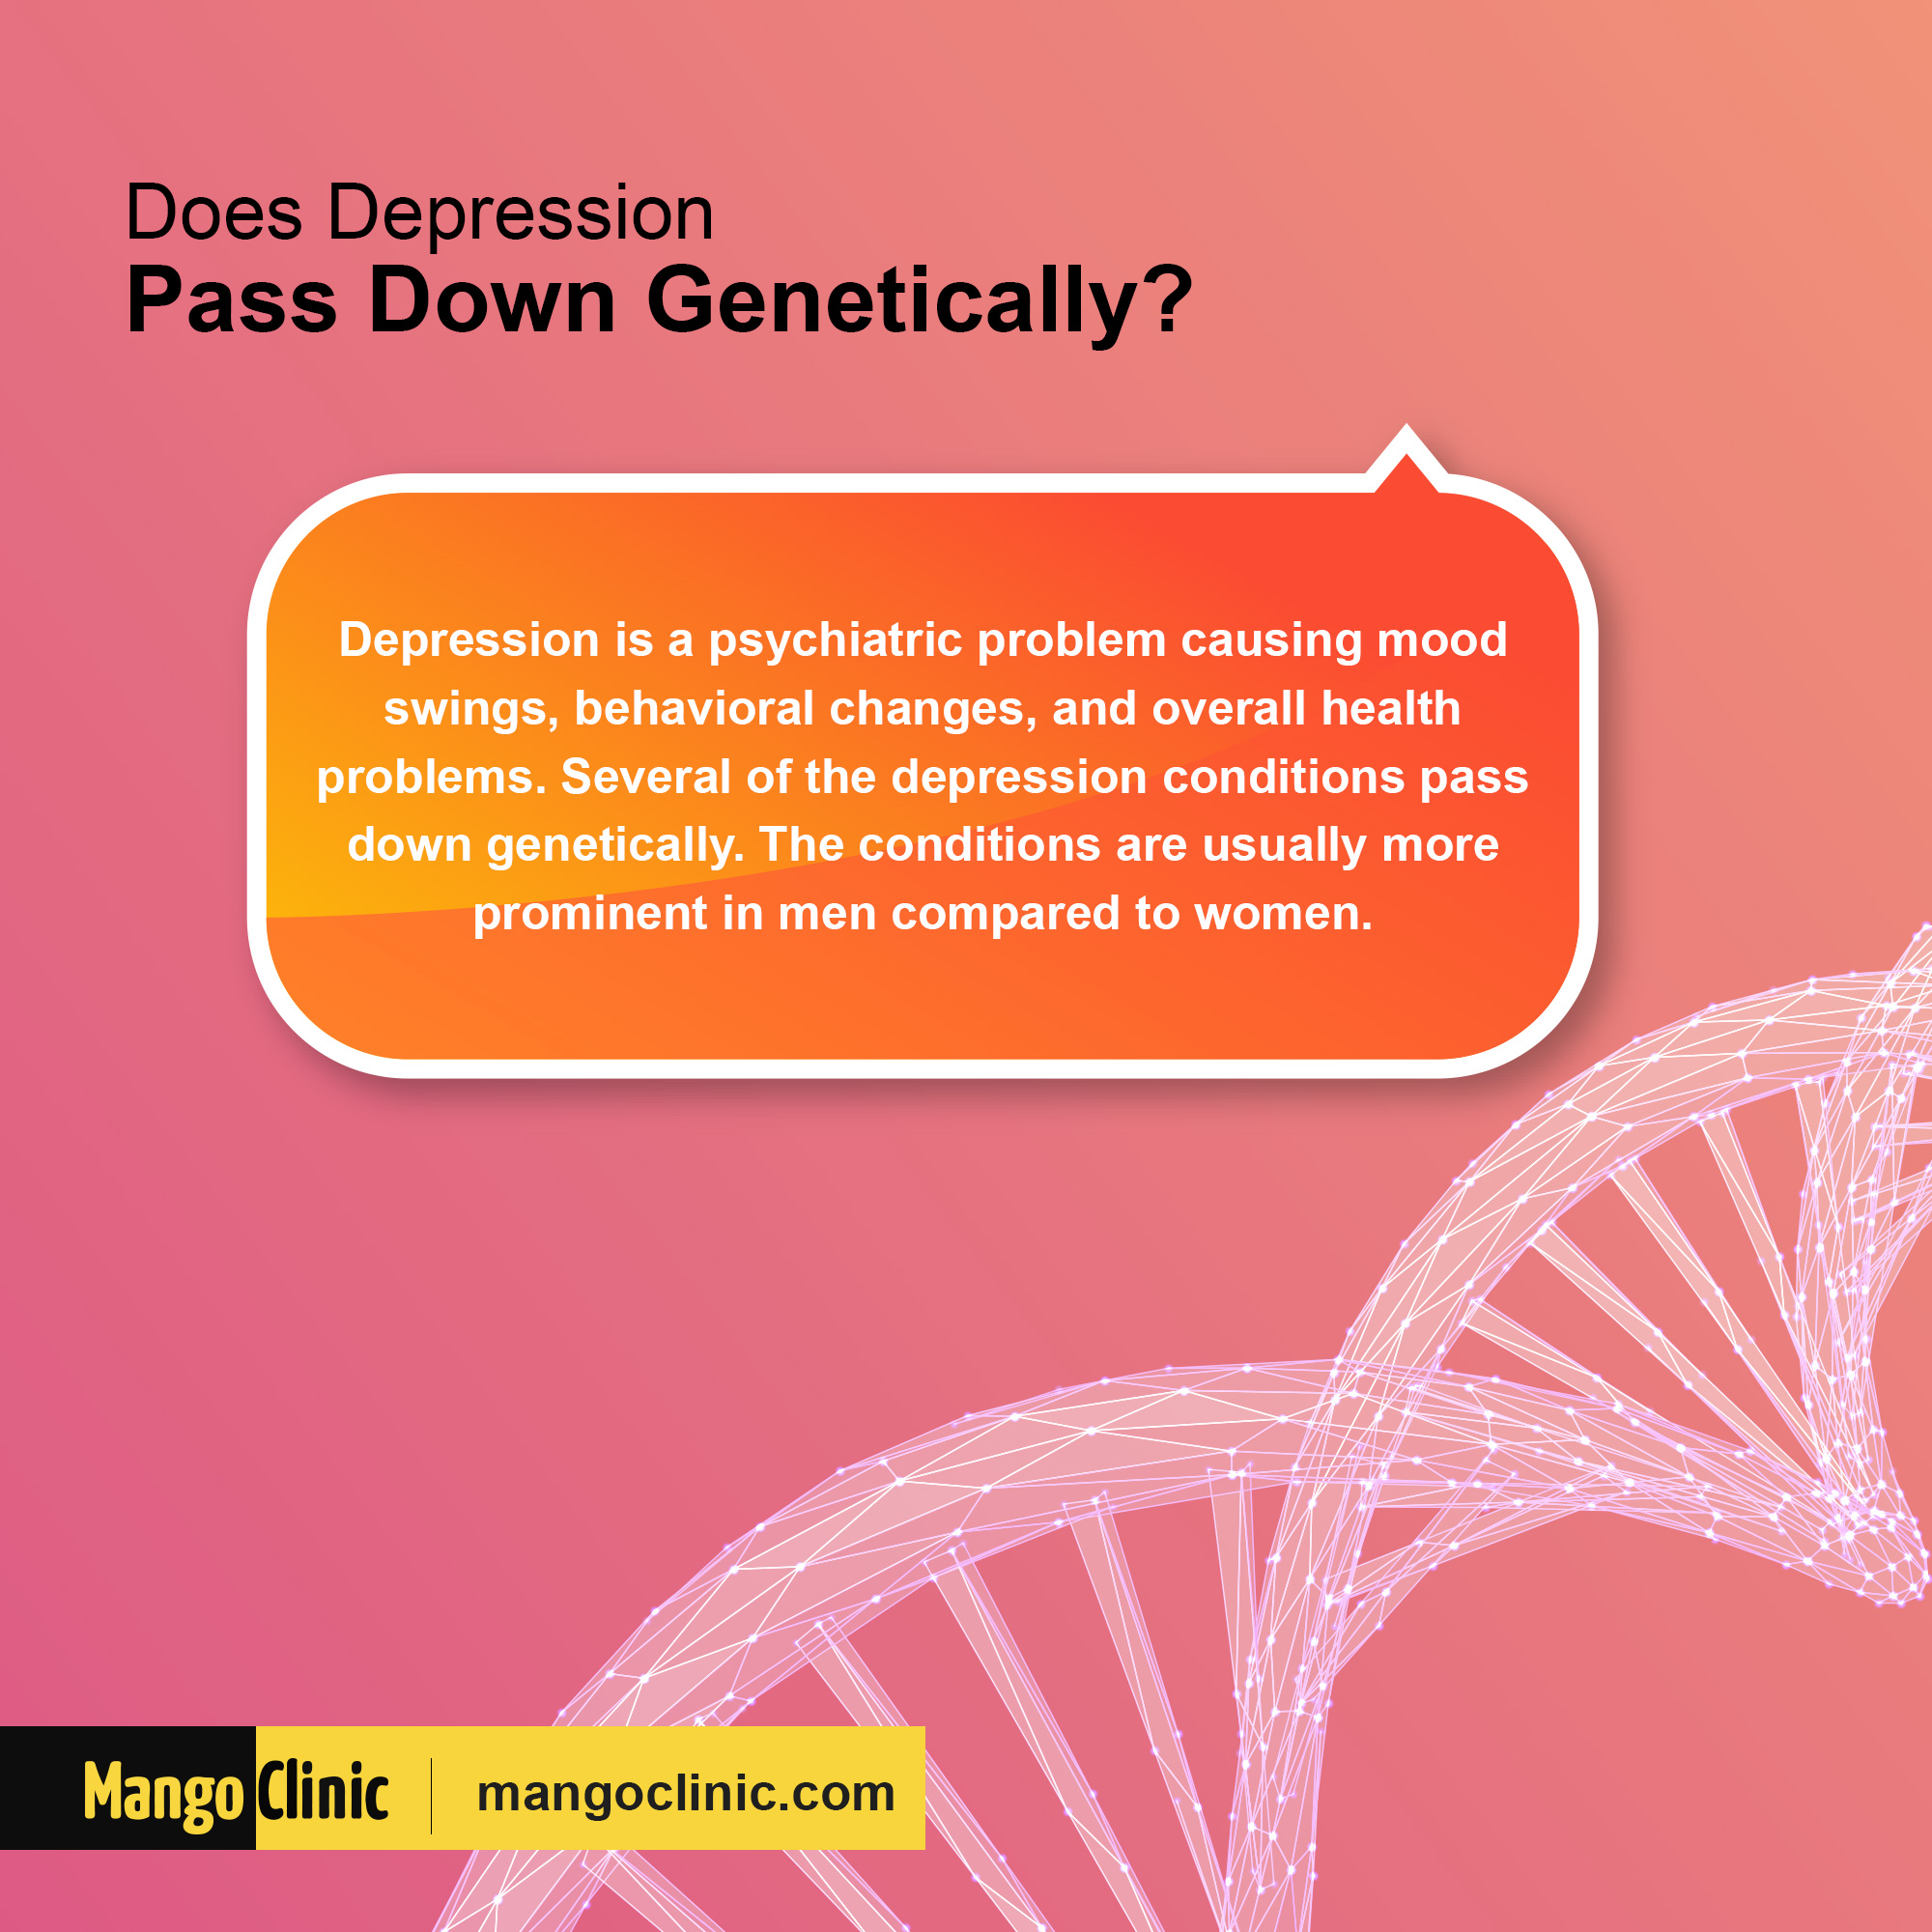 Is depression a genetic disease?